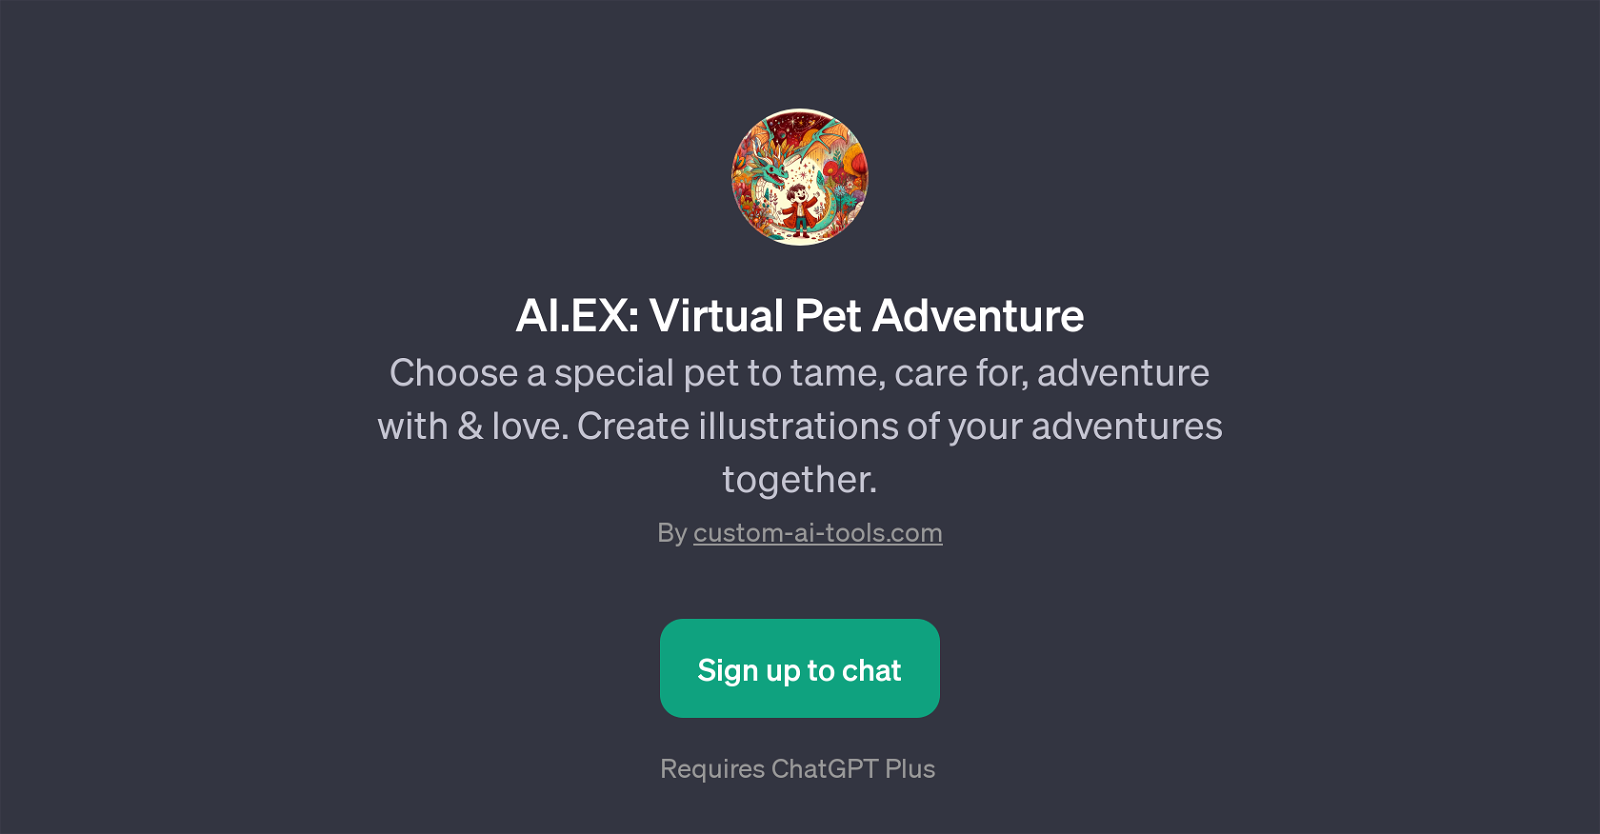 AI.EX: Virtual Pet Adventure website